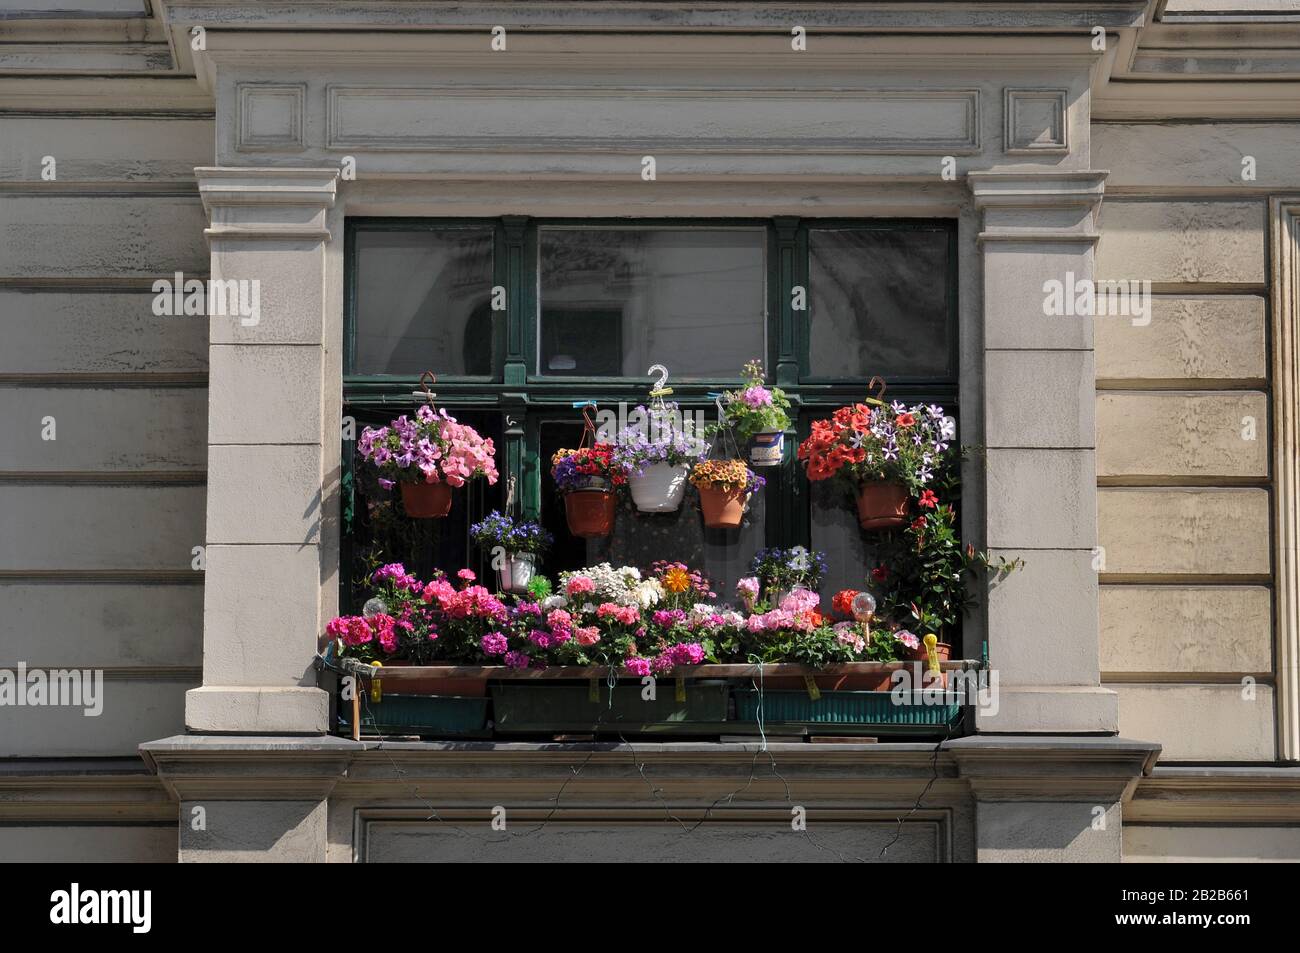 Blumen, Fenster, Kolonnenstrasse, Schoeneberg, Berlino, Deutschland Foto Stock